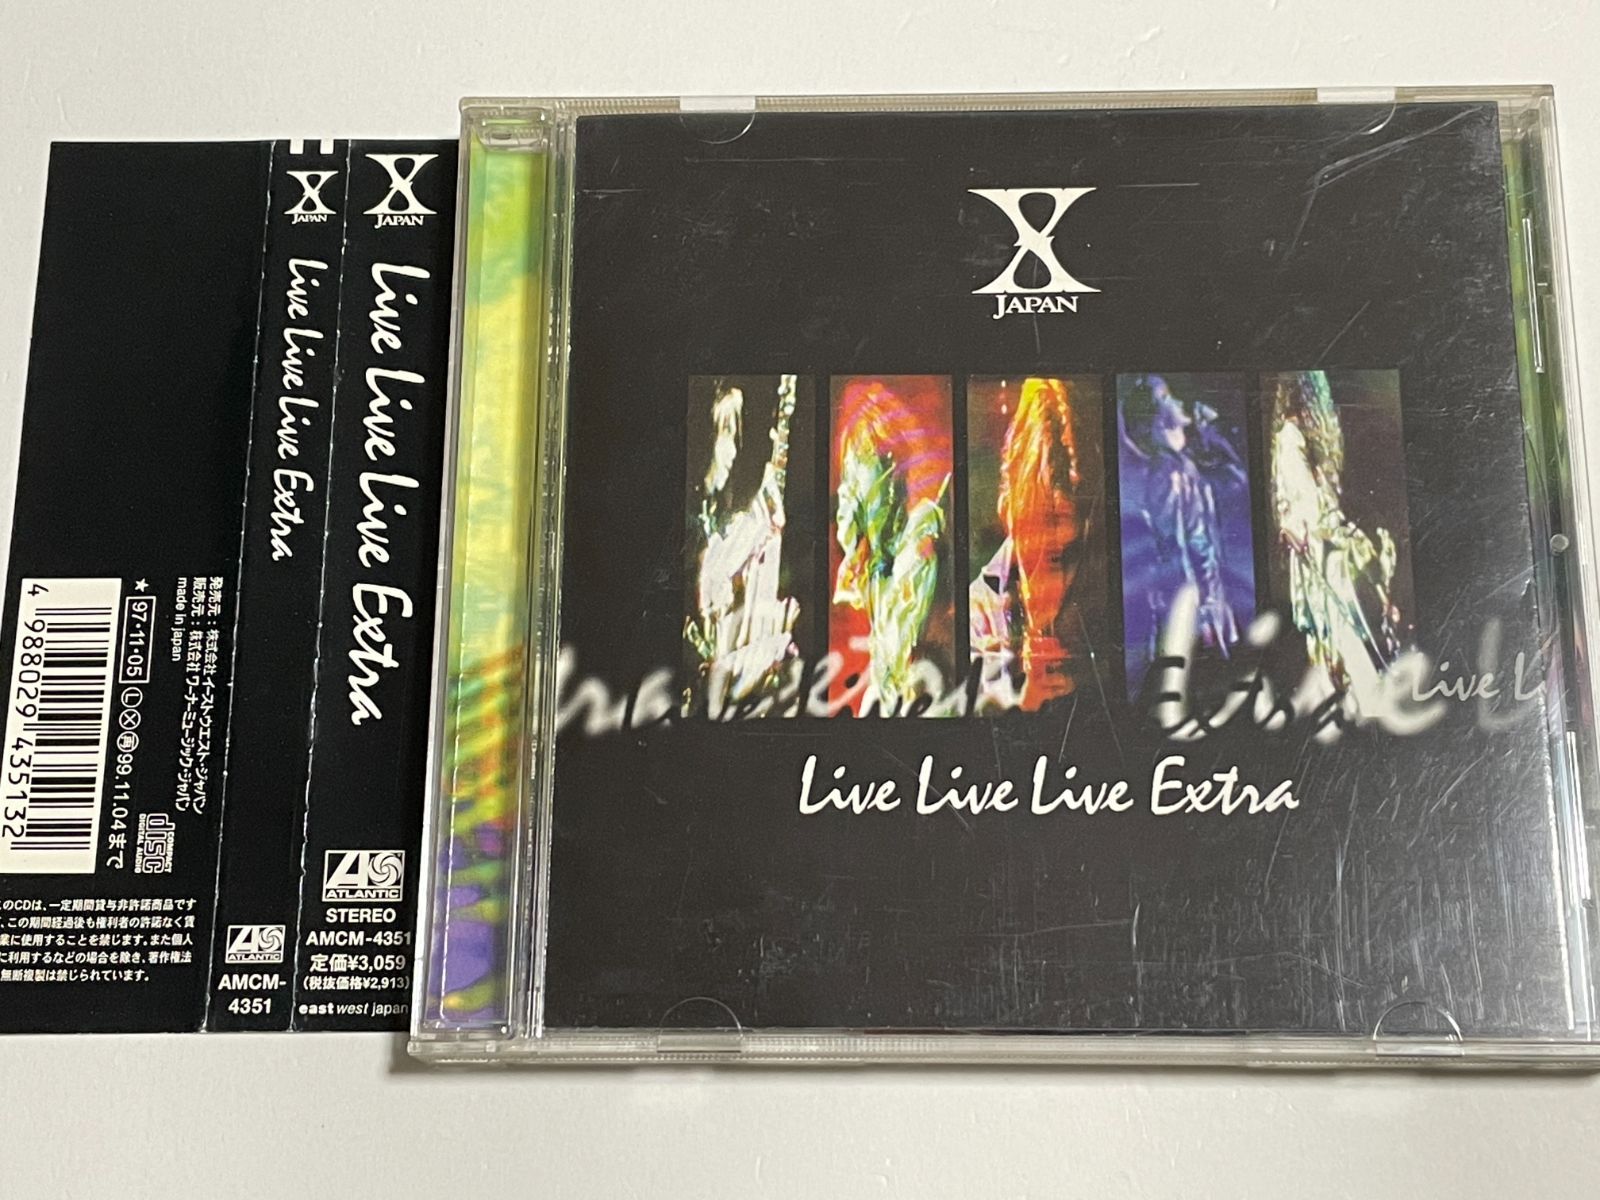 CD X JAPAN『Live Live Live Extra』ライブ・アルバム - メルカリ